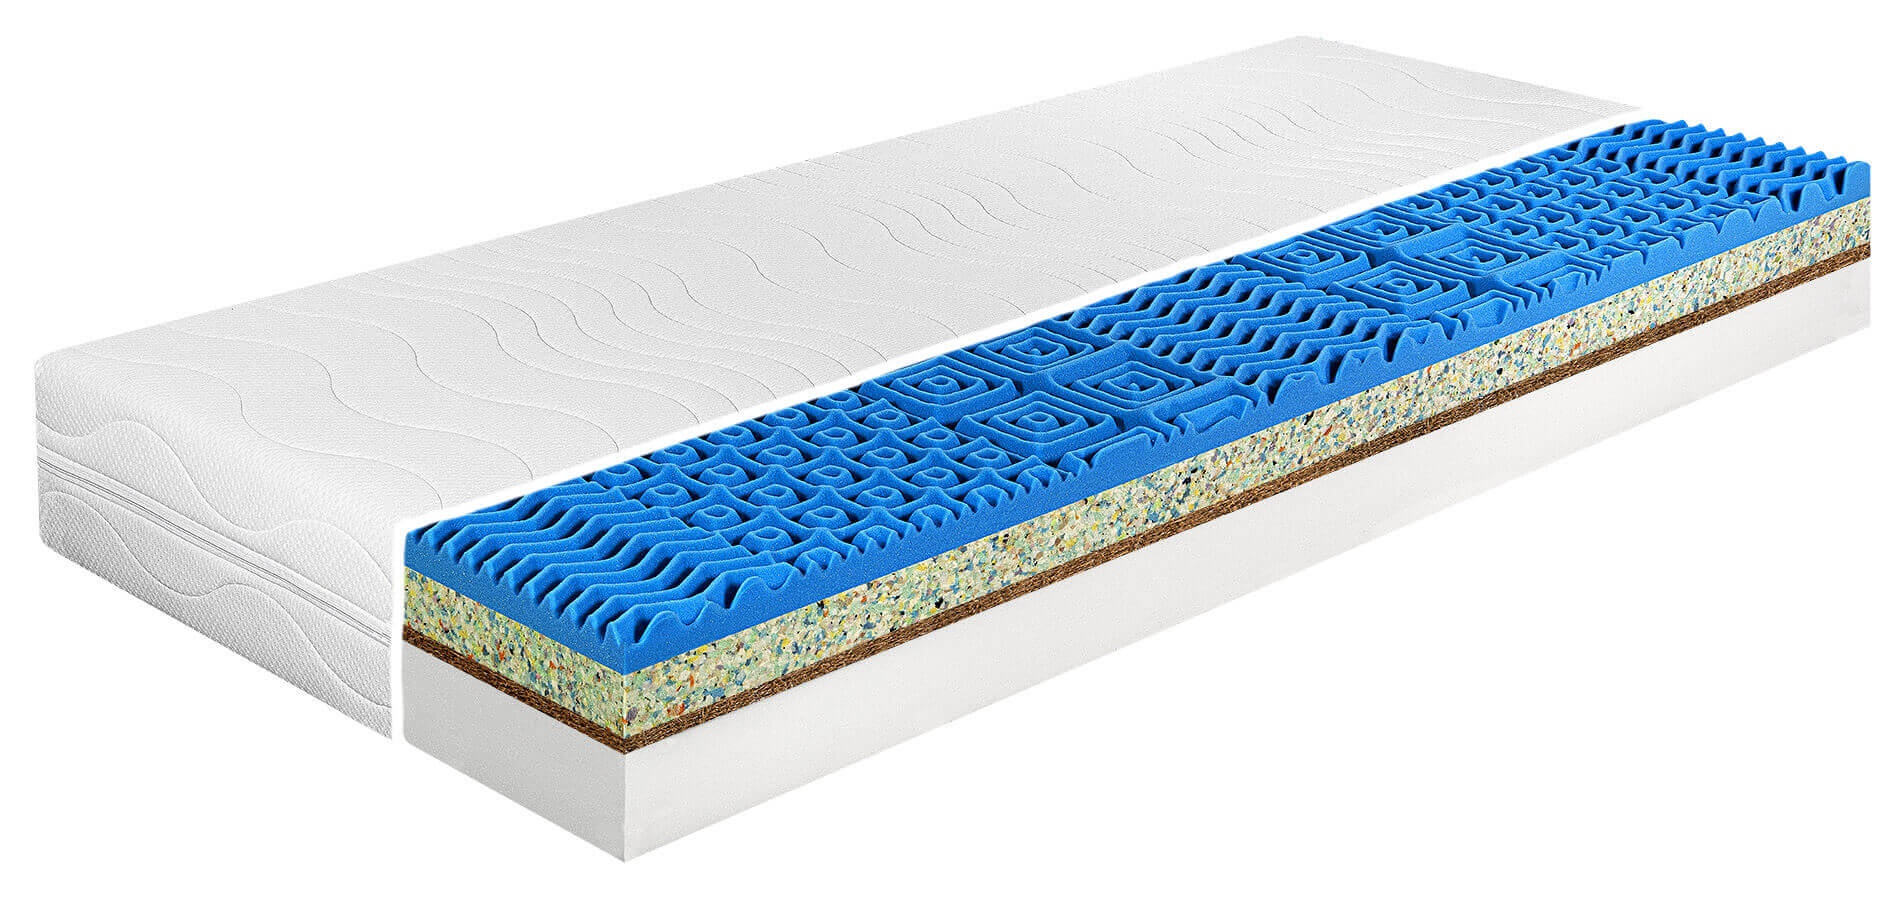 Sendvičová matrace ZEUS PLUS, výška 22 cm Rozměr: 140 x 200 cm, Materiál: chloe aktiv